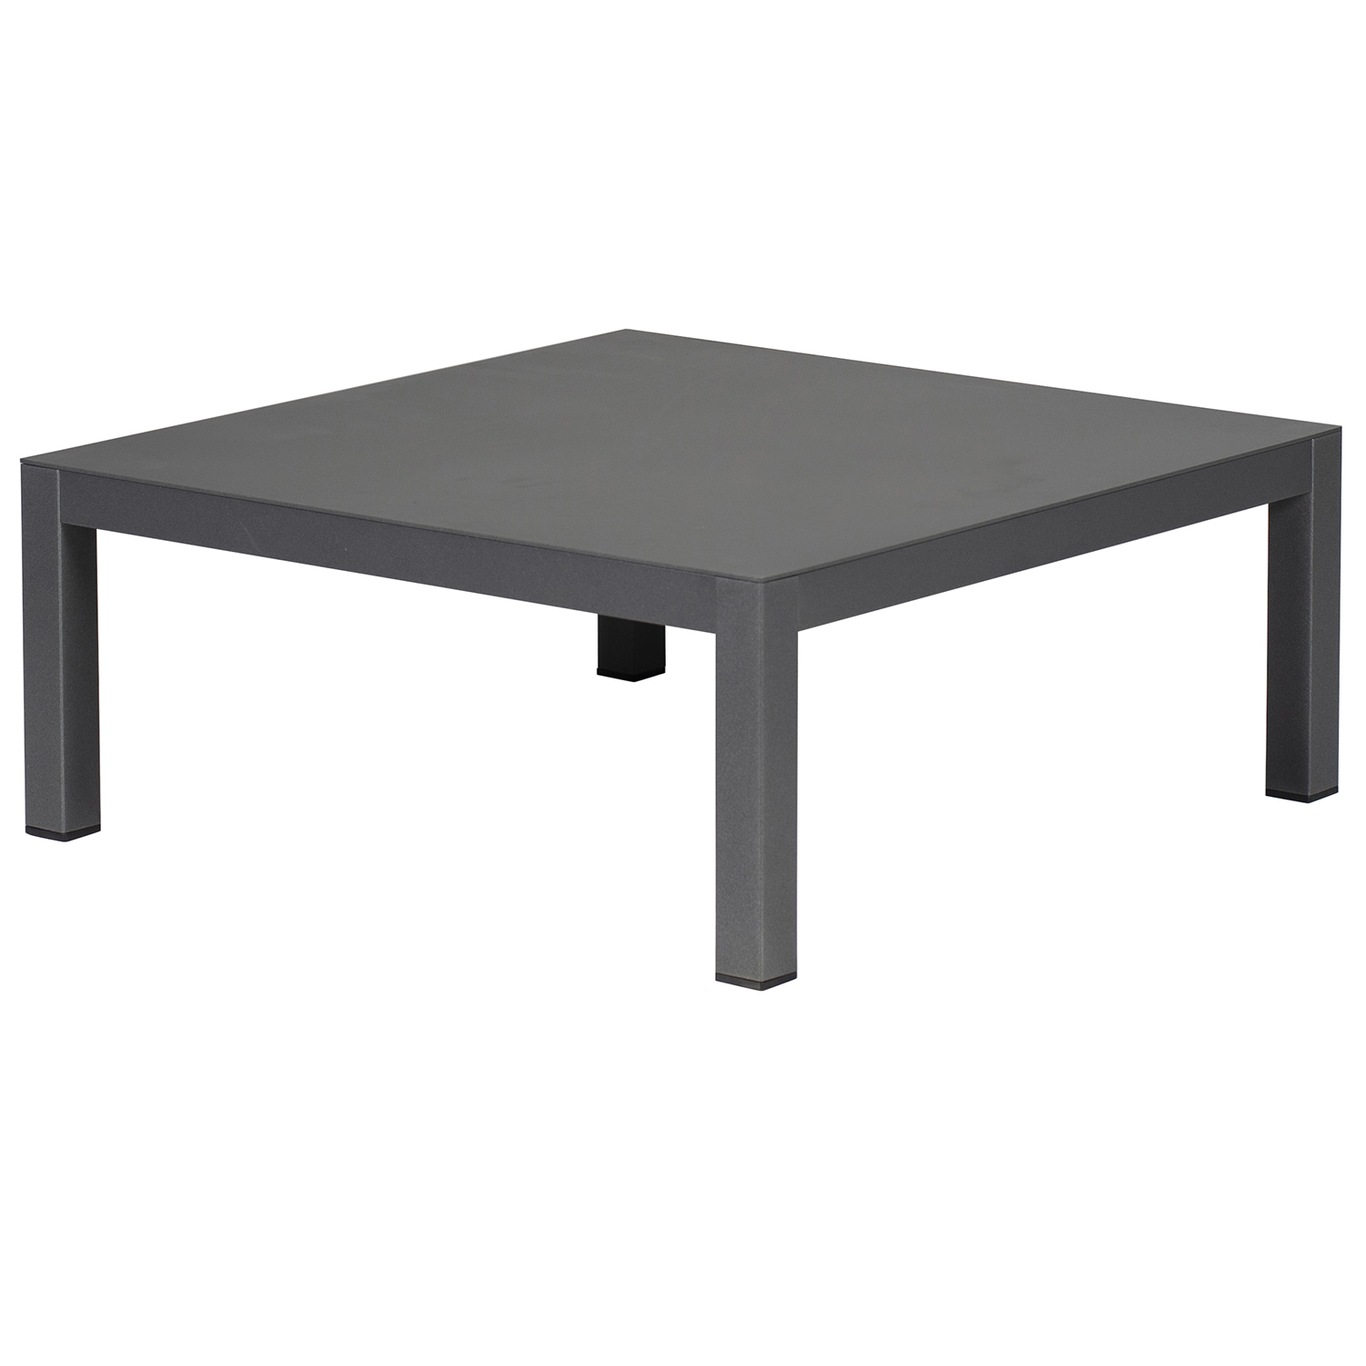 Domino Coffee Table 70x70 cm, Anthracite